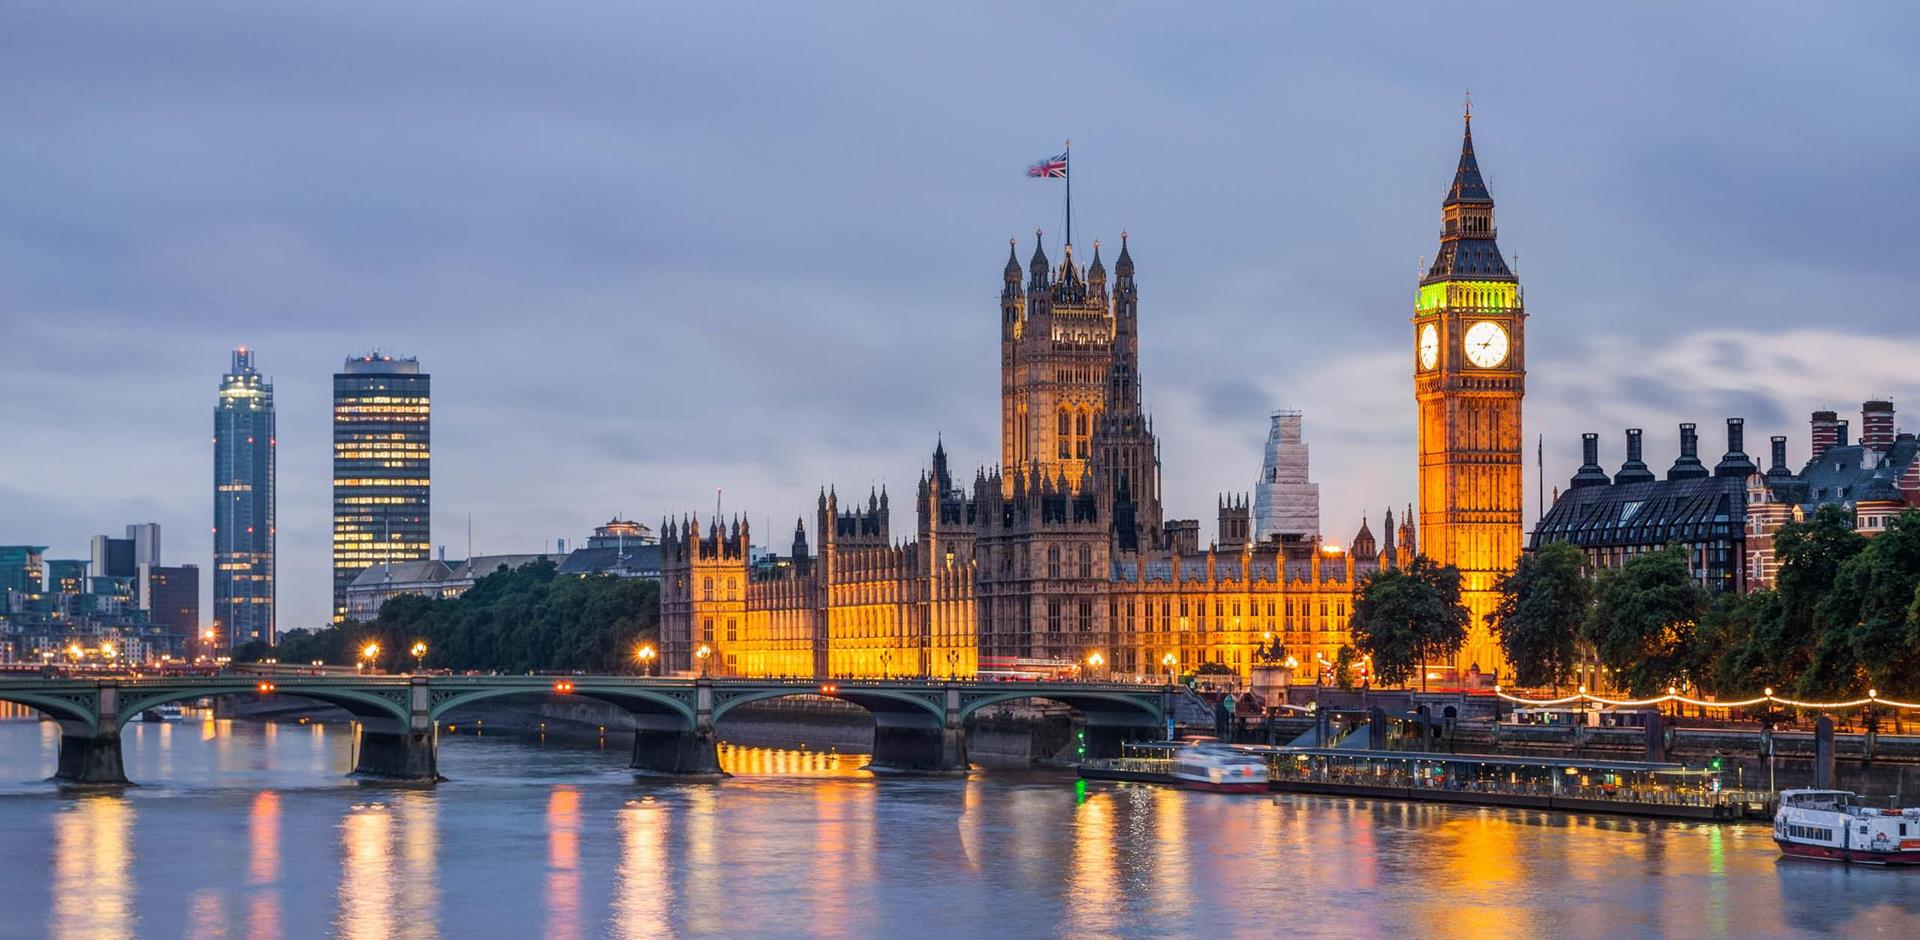 London skyline, Houses of Parliament